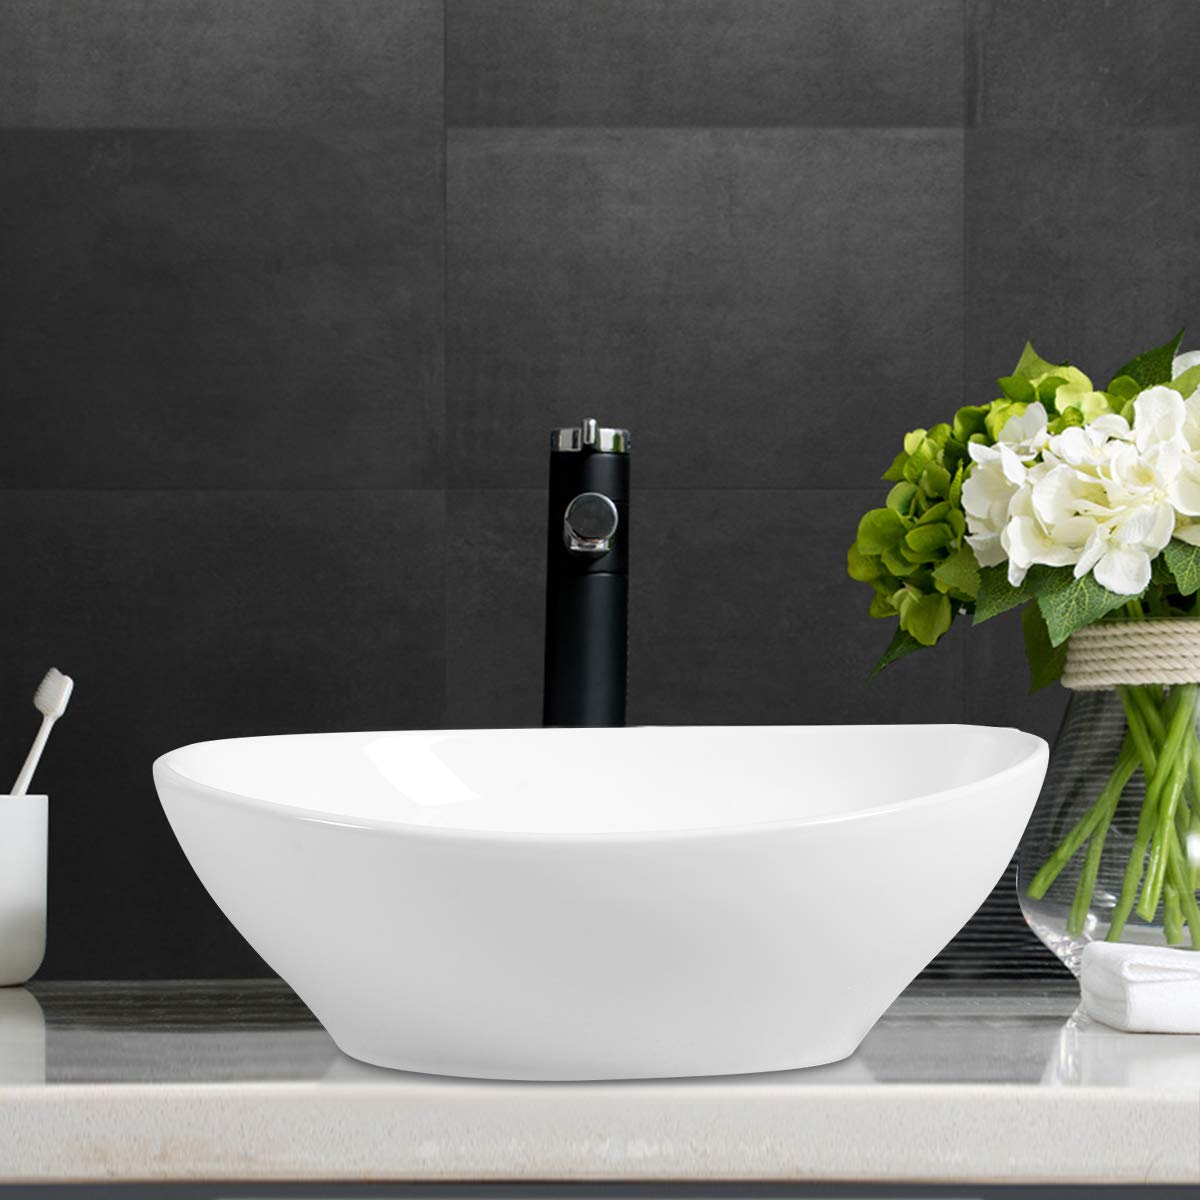 Giantex Vessel Sink 16x13 Inch Basin Porcelain W/Pop Up Drain Oval Bathroom Ceramic Sink Bowl